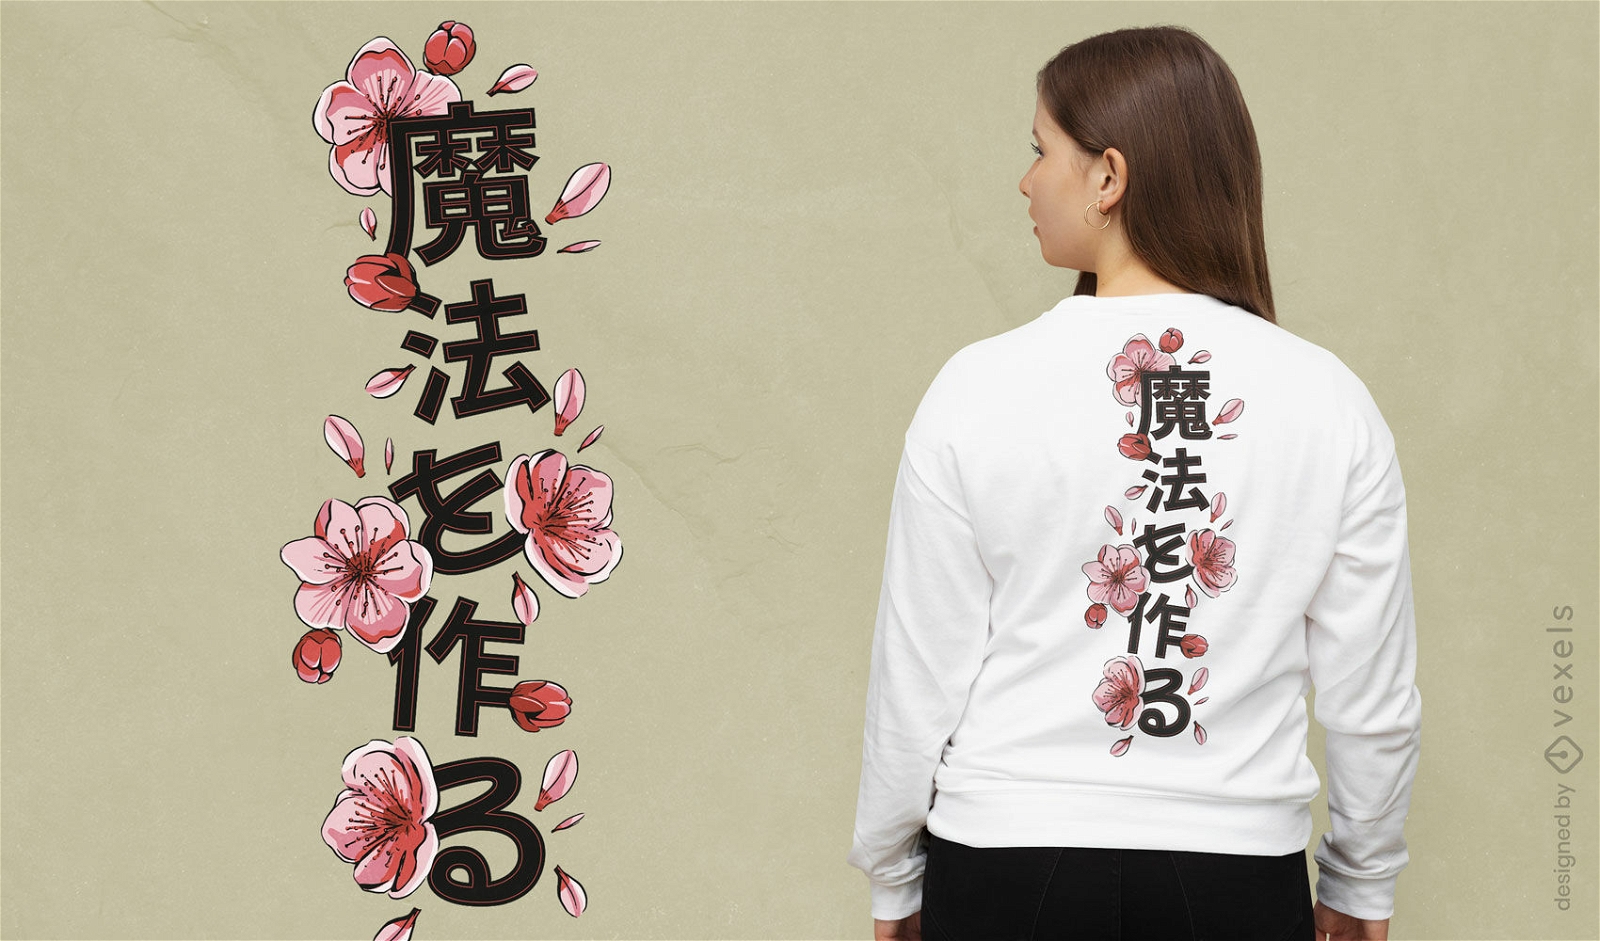 Dise?o de camiseta con cita japonesa floral.